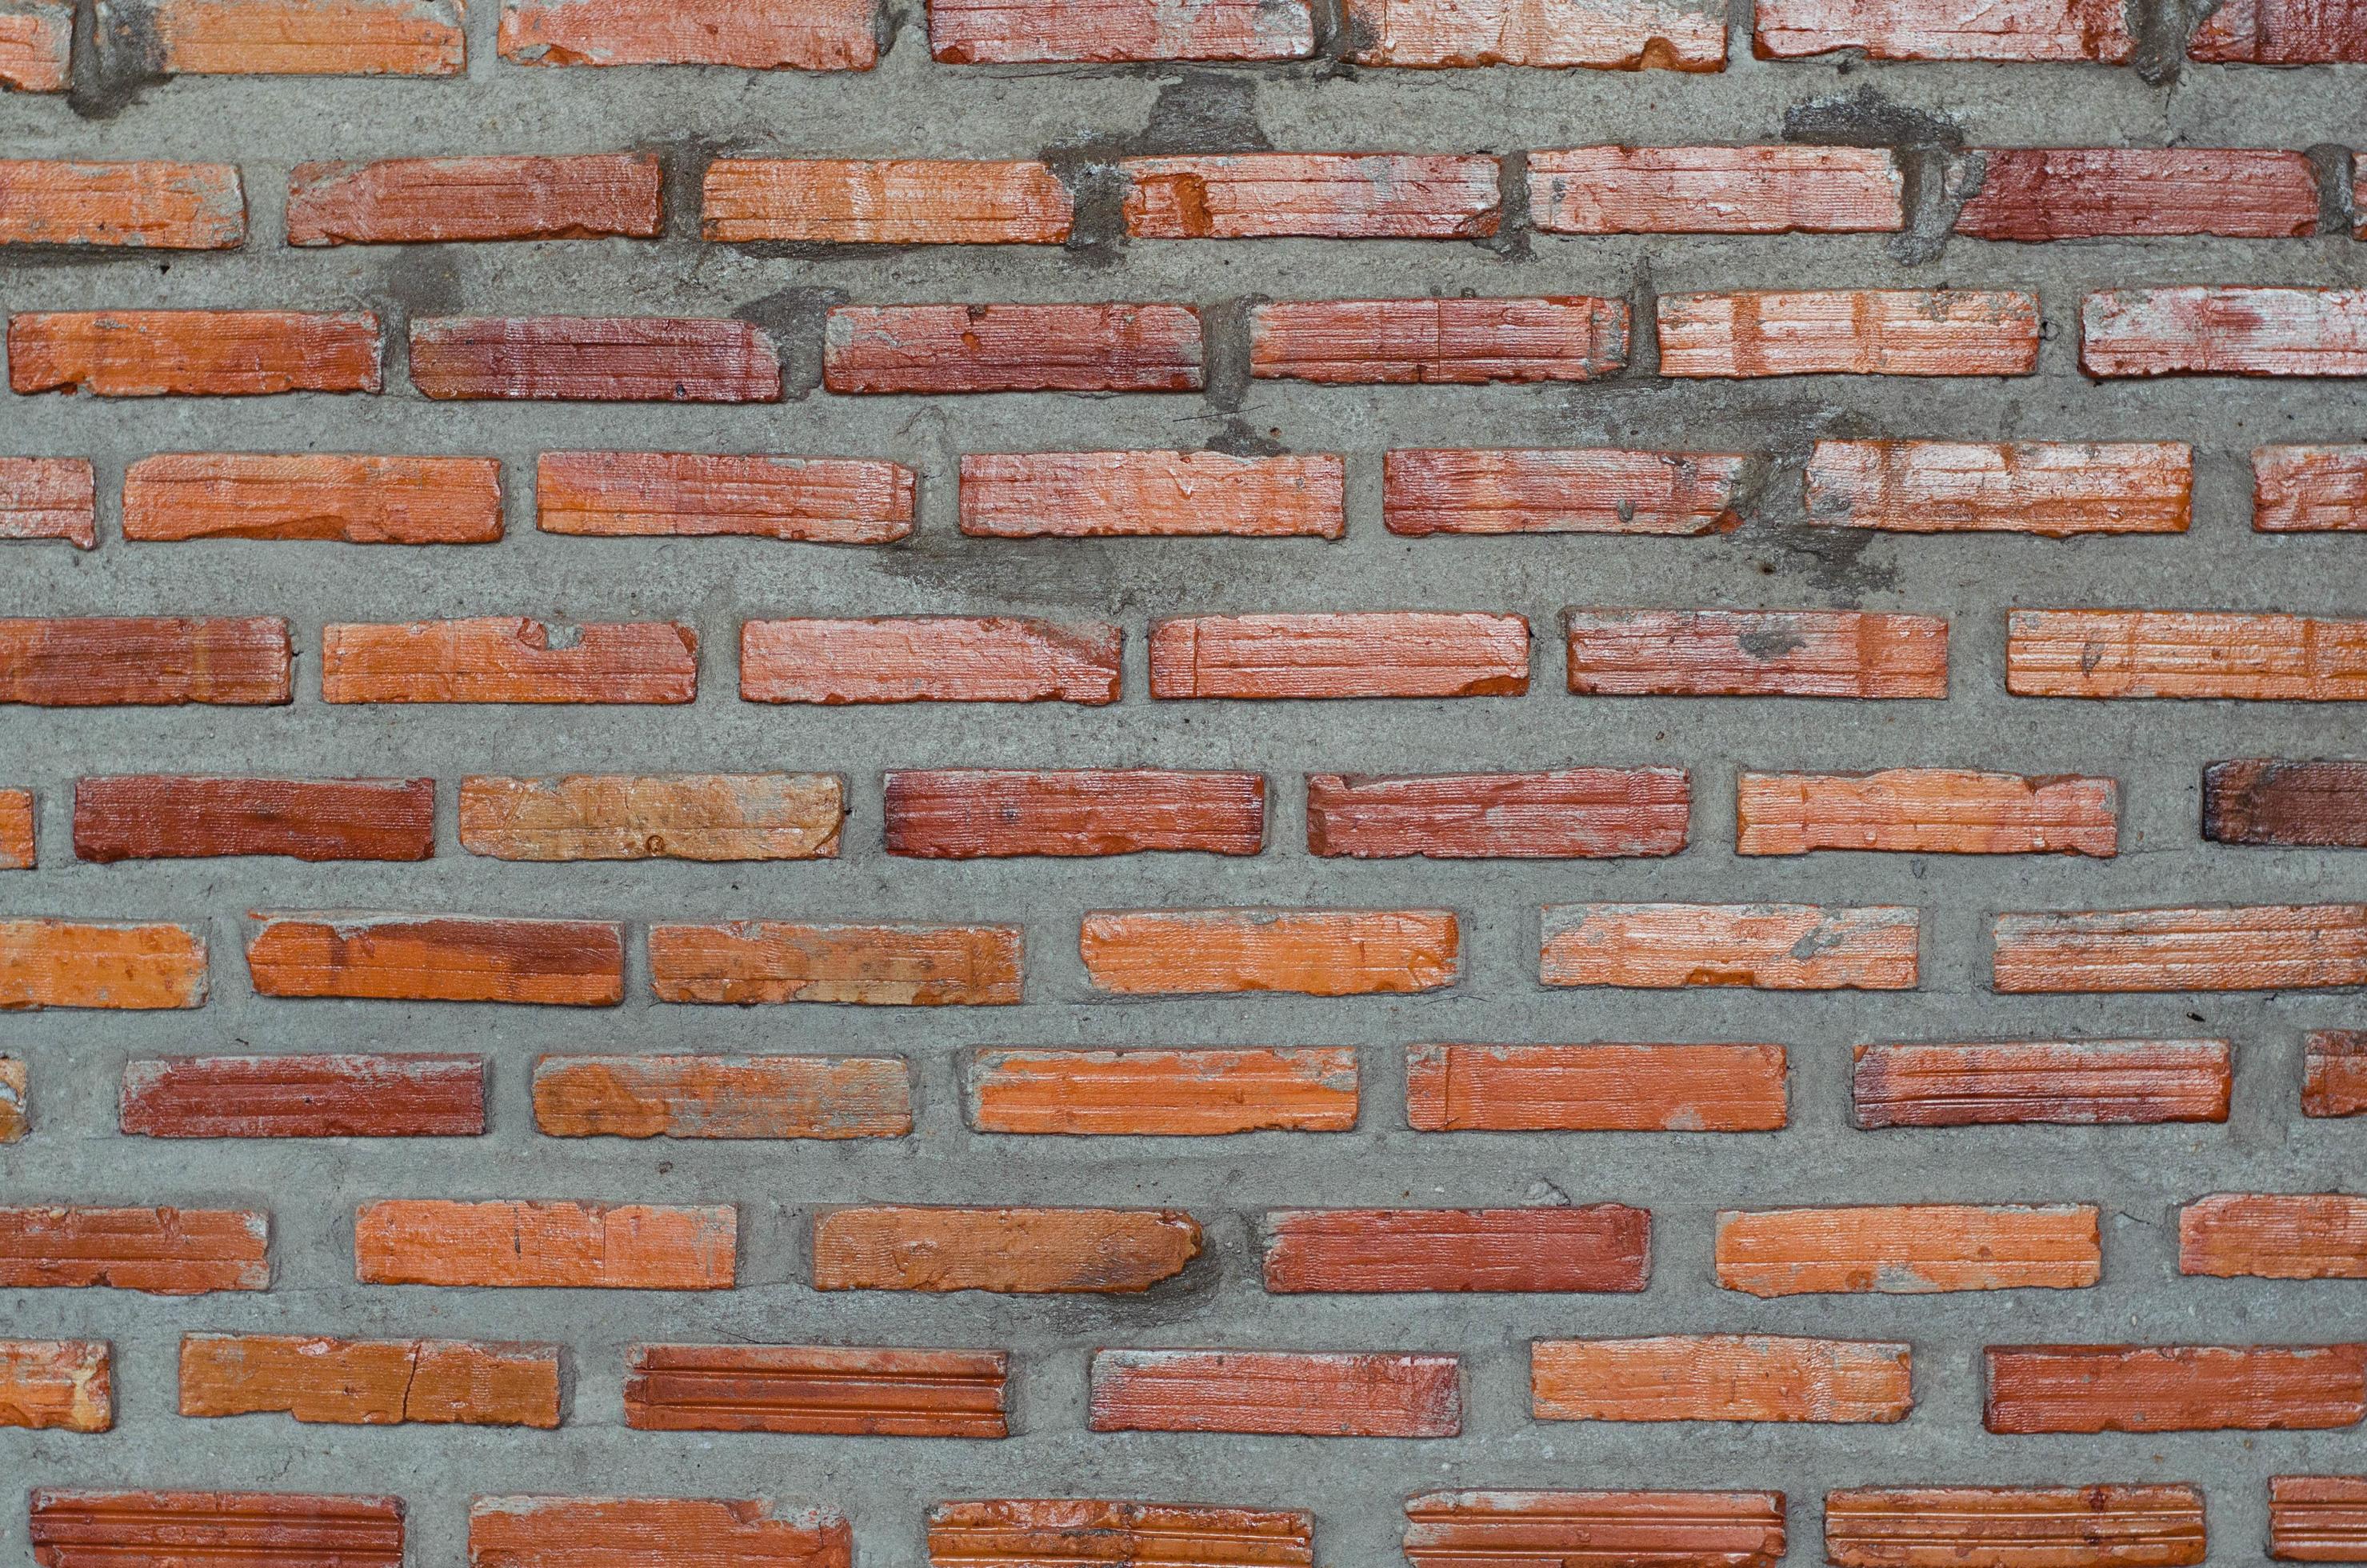 Red Brick Wall Decorative Surface Stock Image - Image of brick, detail:  65403999